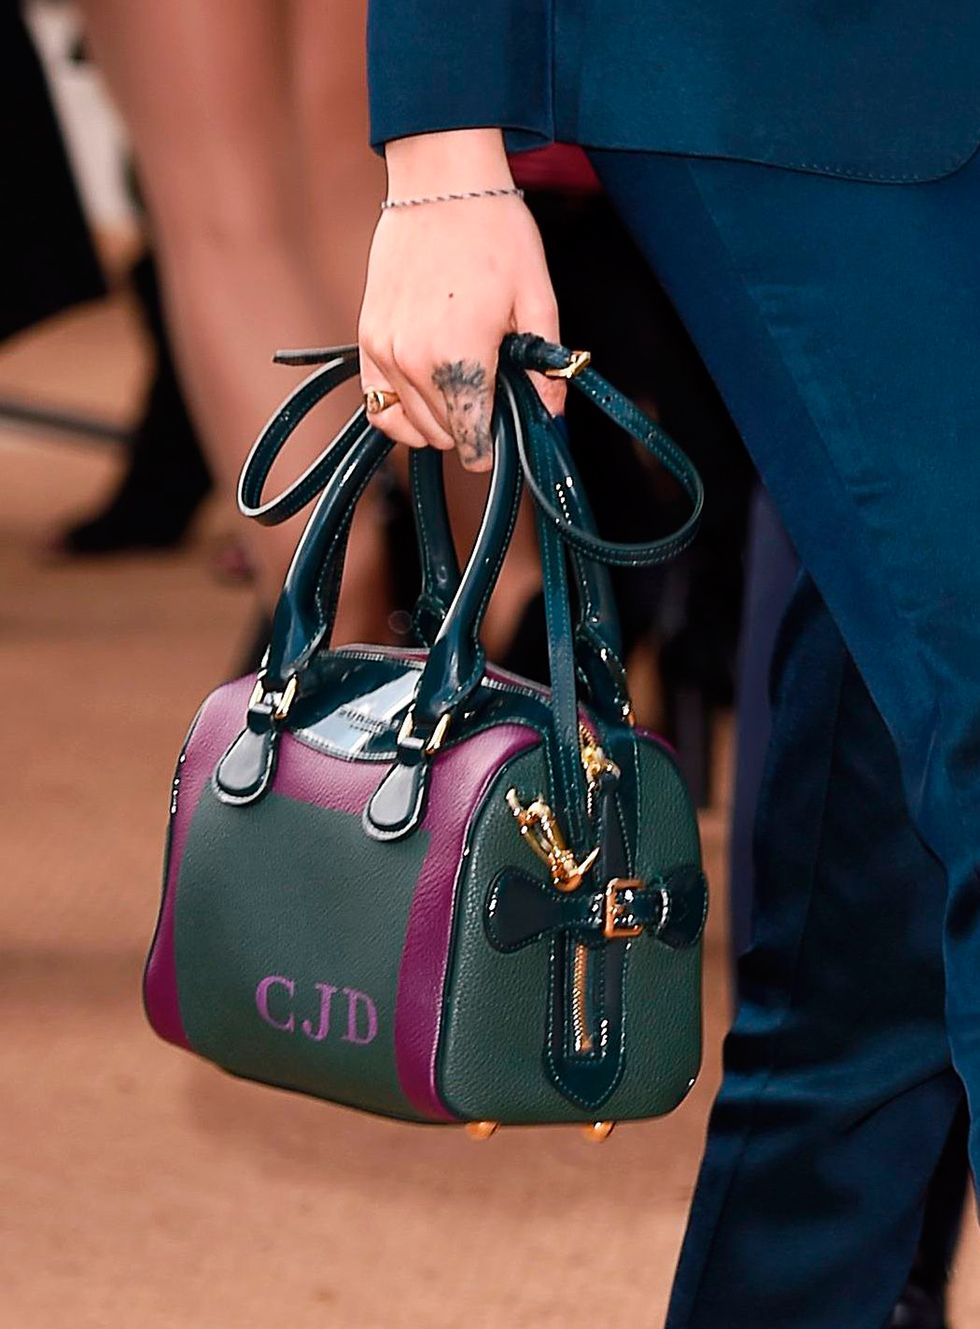 London Fashion Week: Cara Delevingne's CJD Burberry bag